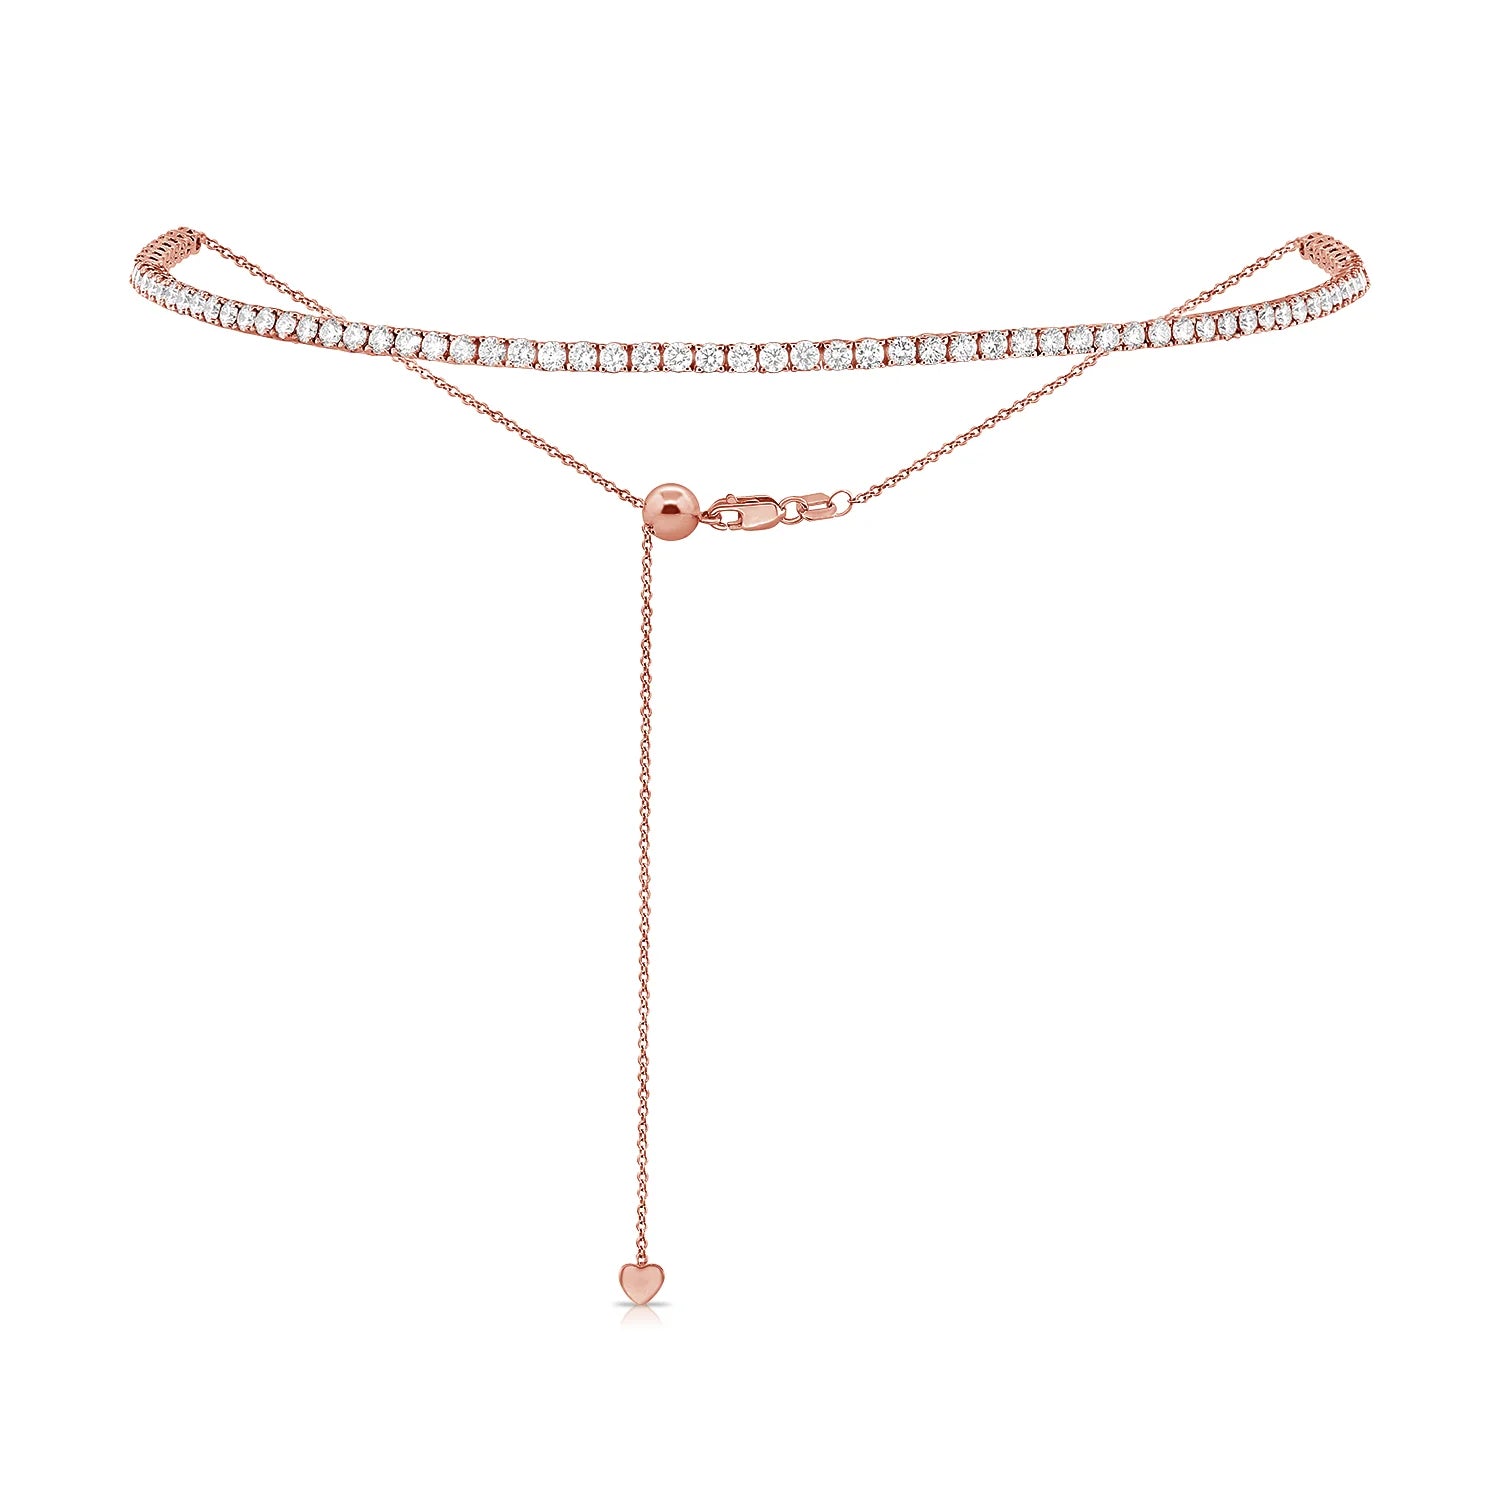 Adjustable Choker Tennis Necklace